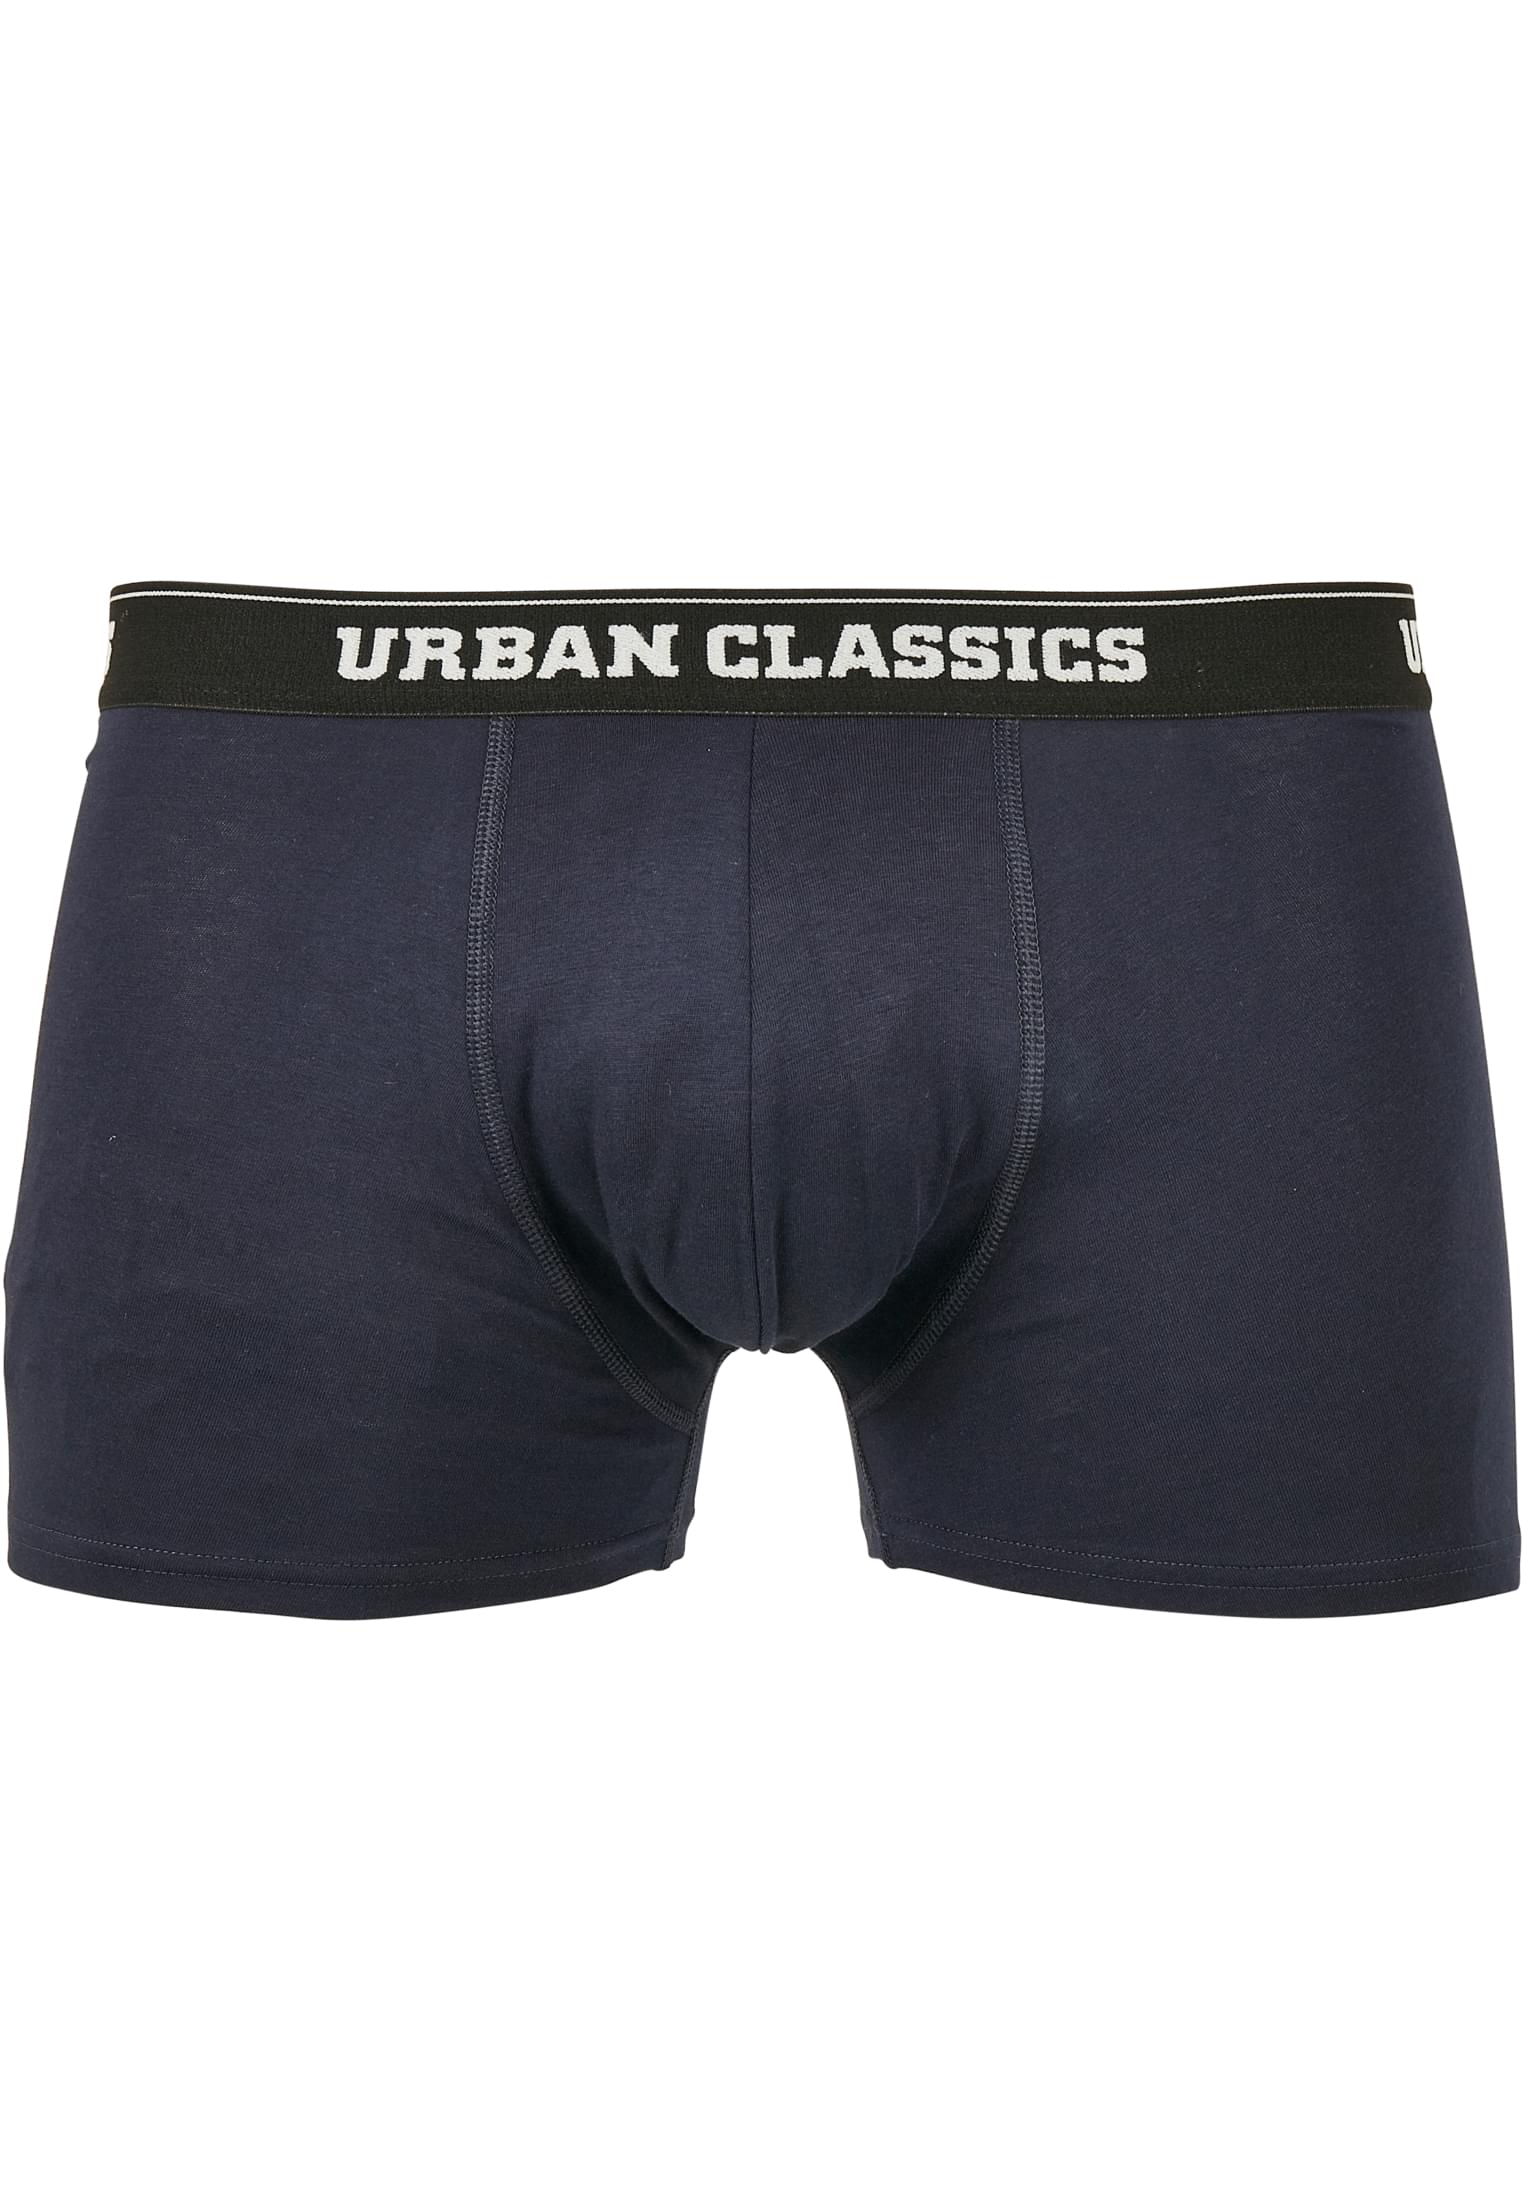 Underwear Organic Boxer Shorts 3-Pack in Farbe white/navy/black